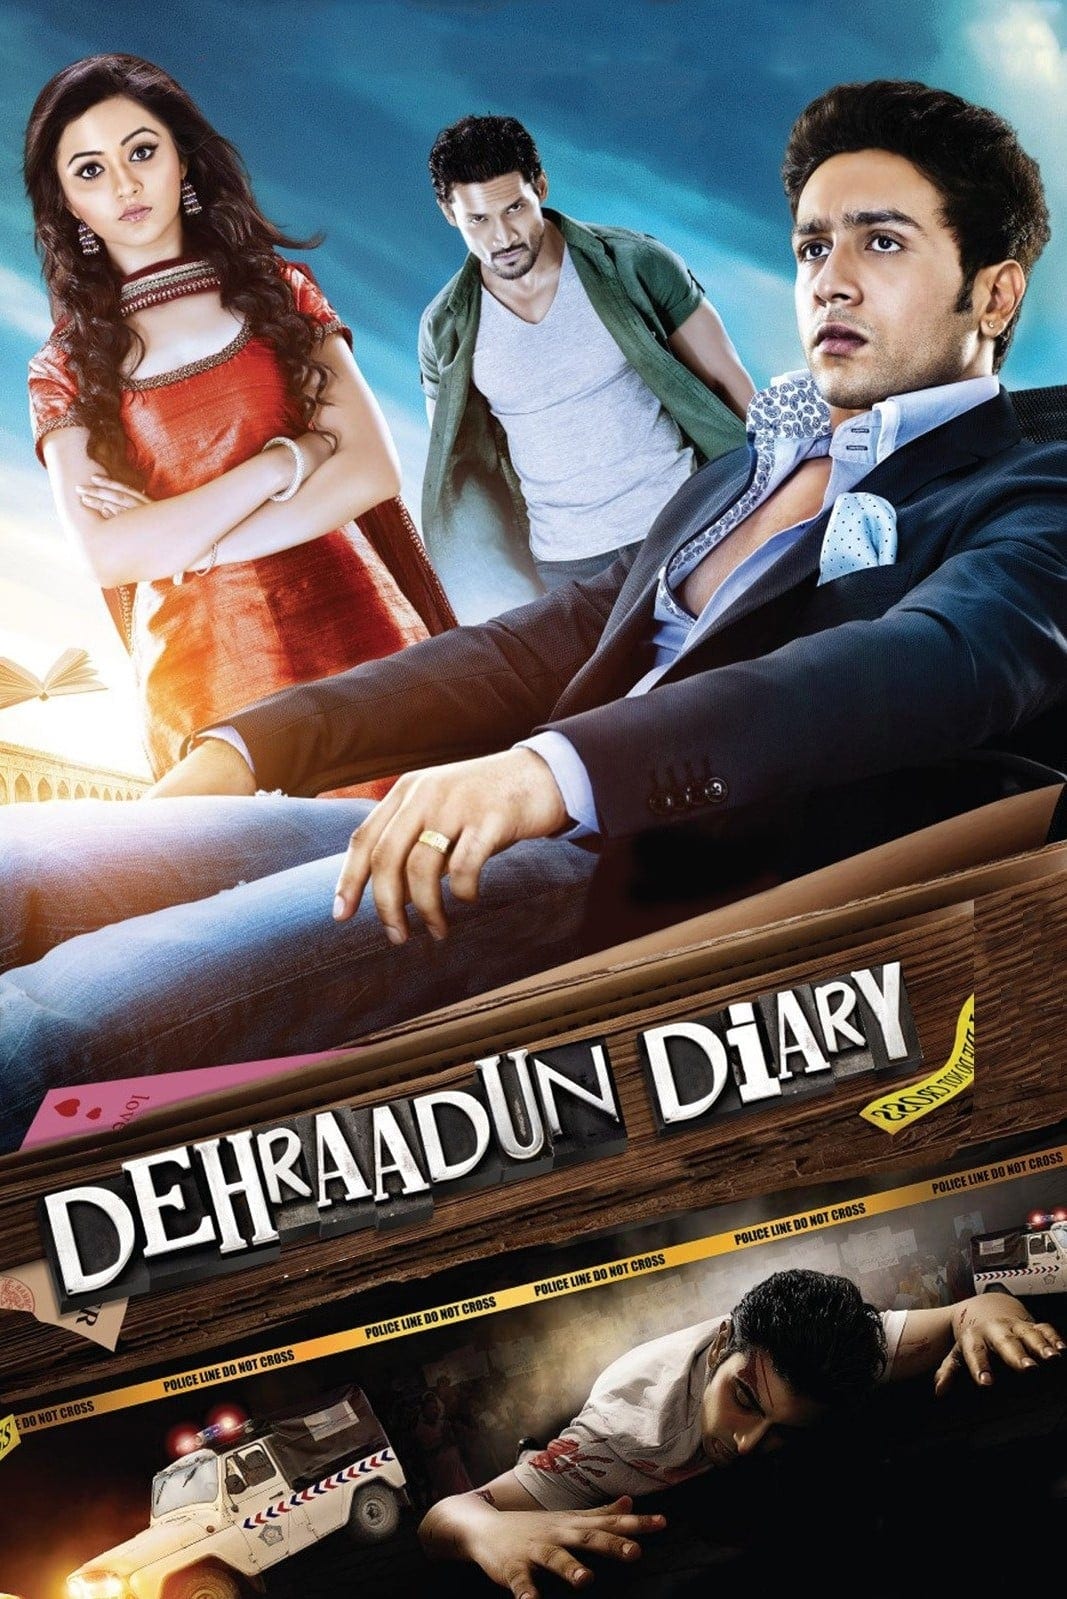 Poster for the movie "Dehraadun Diary"